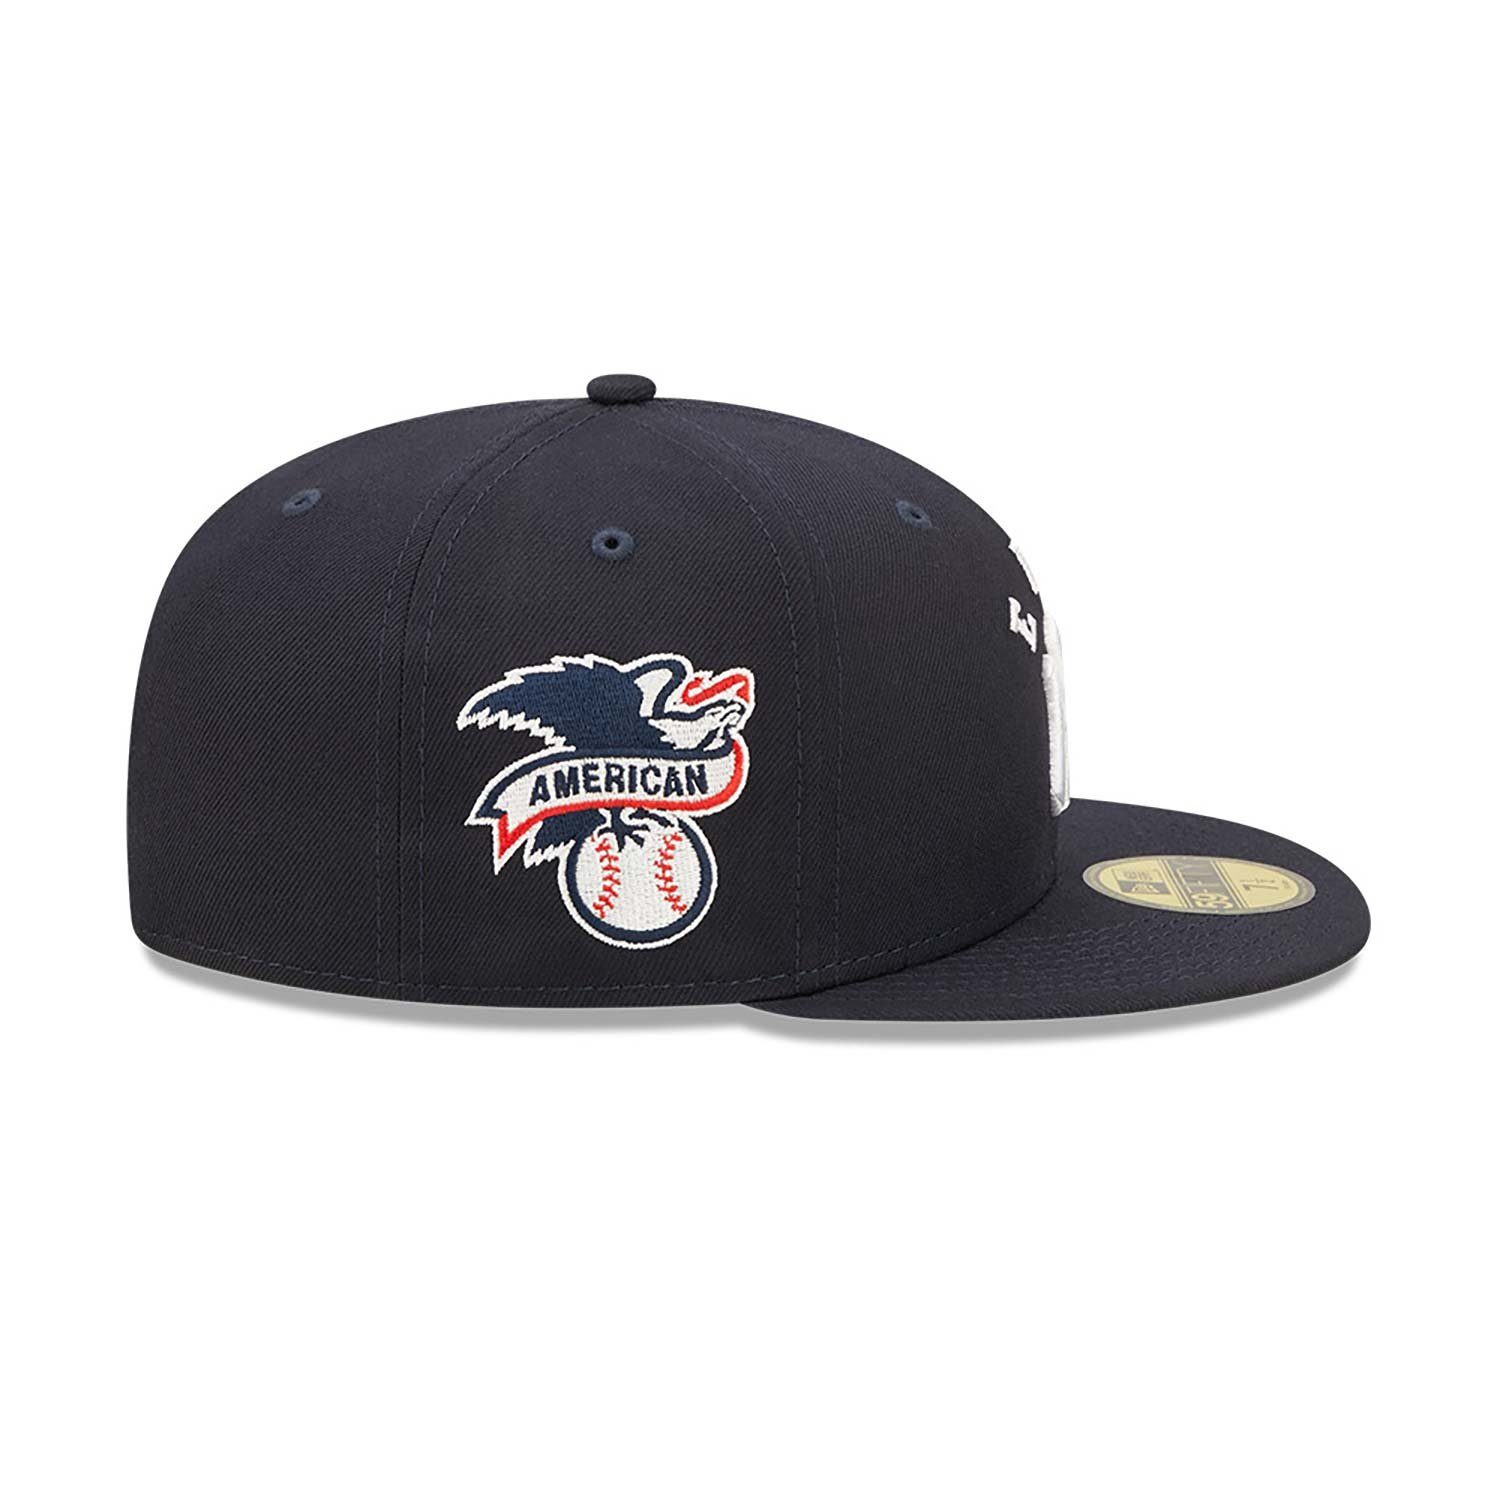 York (1-St) Cap Cap Baseball Yankees Era 59Fifty Era Team League New New New